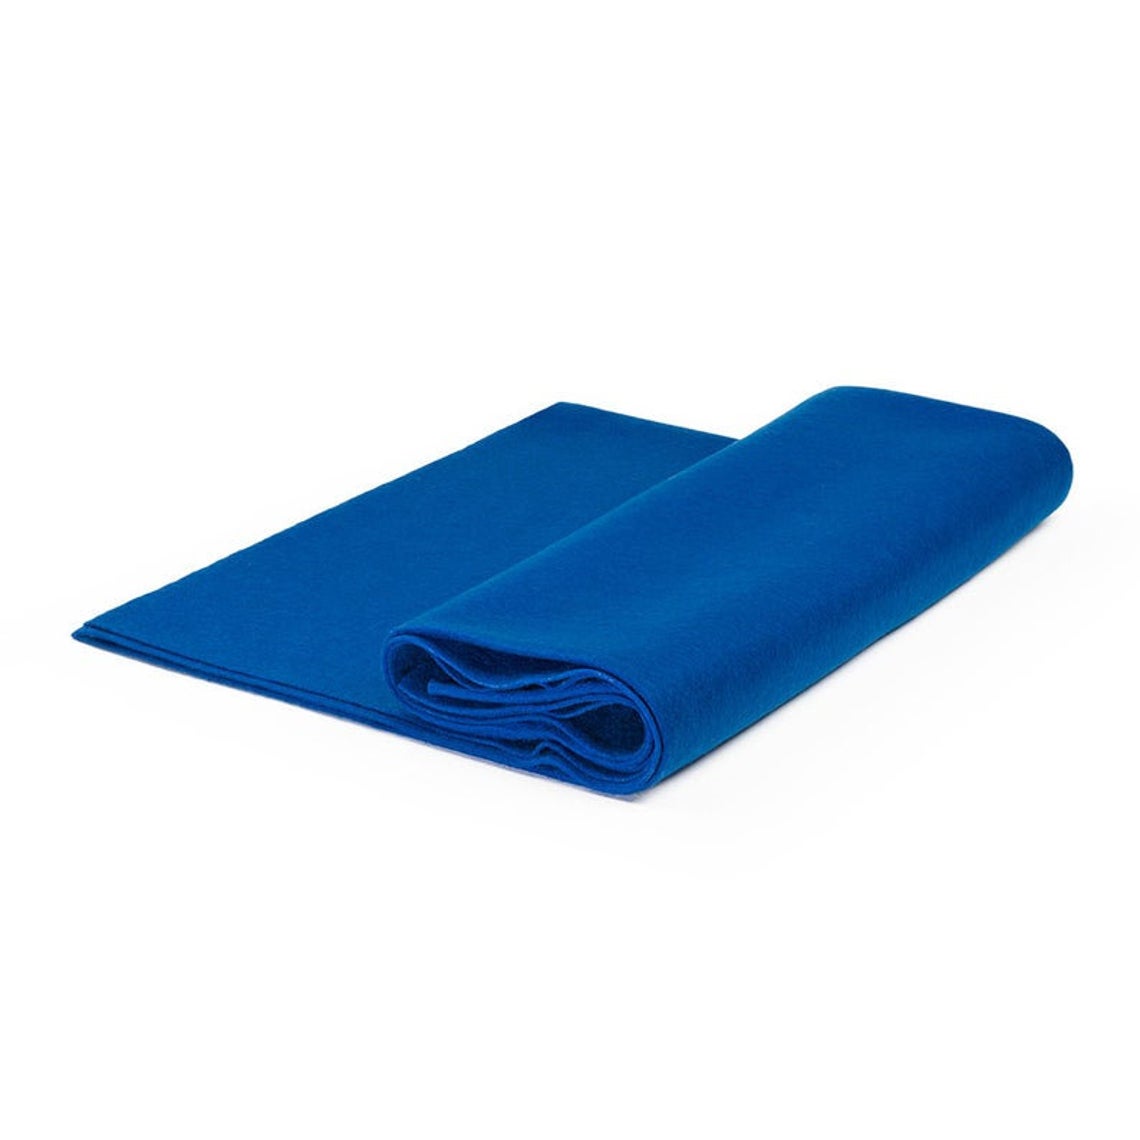 Acrylic Felt Fabric By The Roll | 20 yards | Wholesale Fabric ICE FABRICS Royal Blue